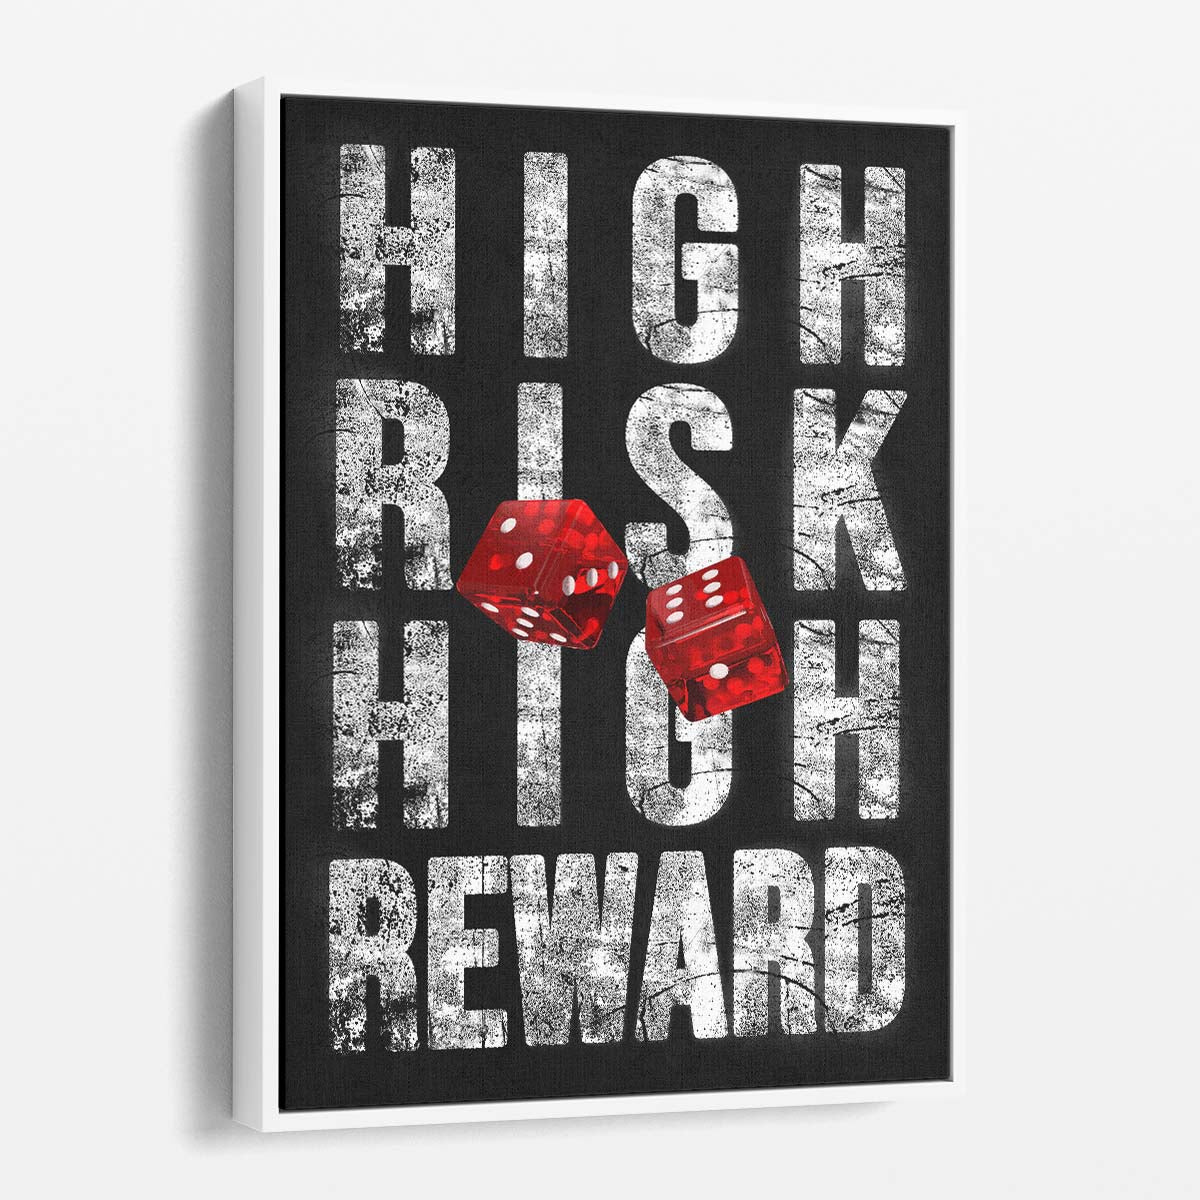 High Risk High Reward Wall Art by Luxuriance Designs. Made in USA.